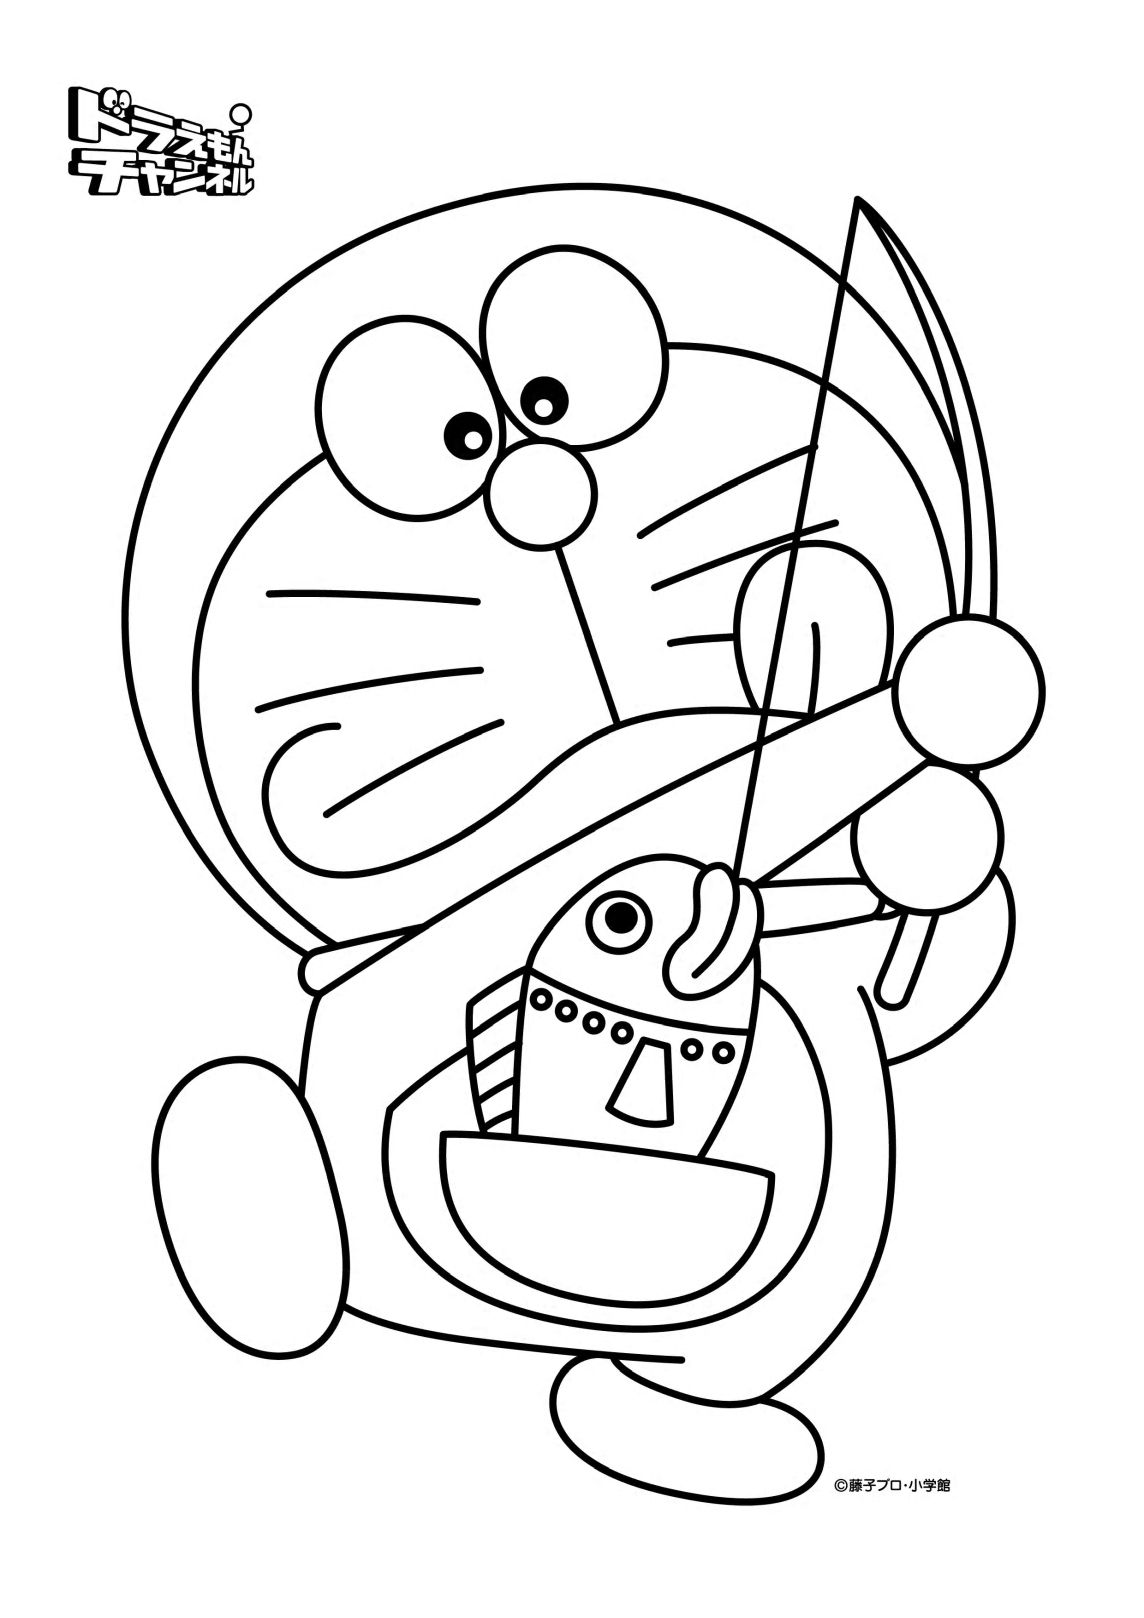 Free Doraemon Coloring Pages, Download Free Doraemon Coloring ...